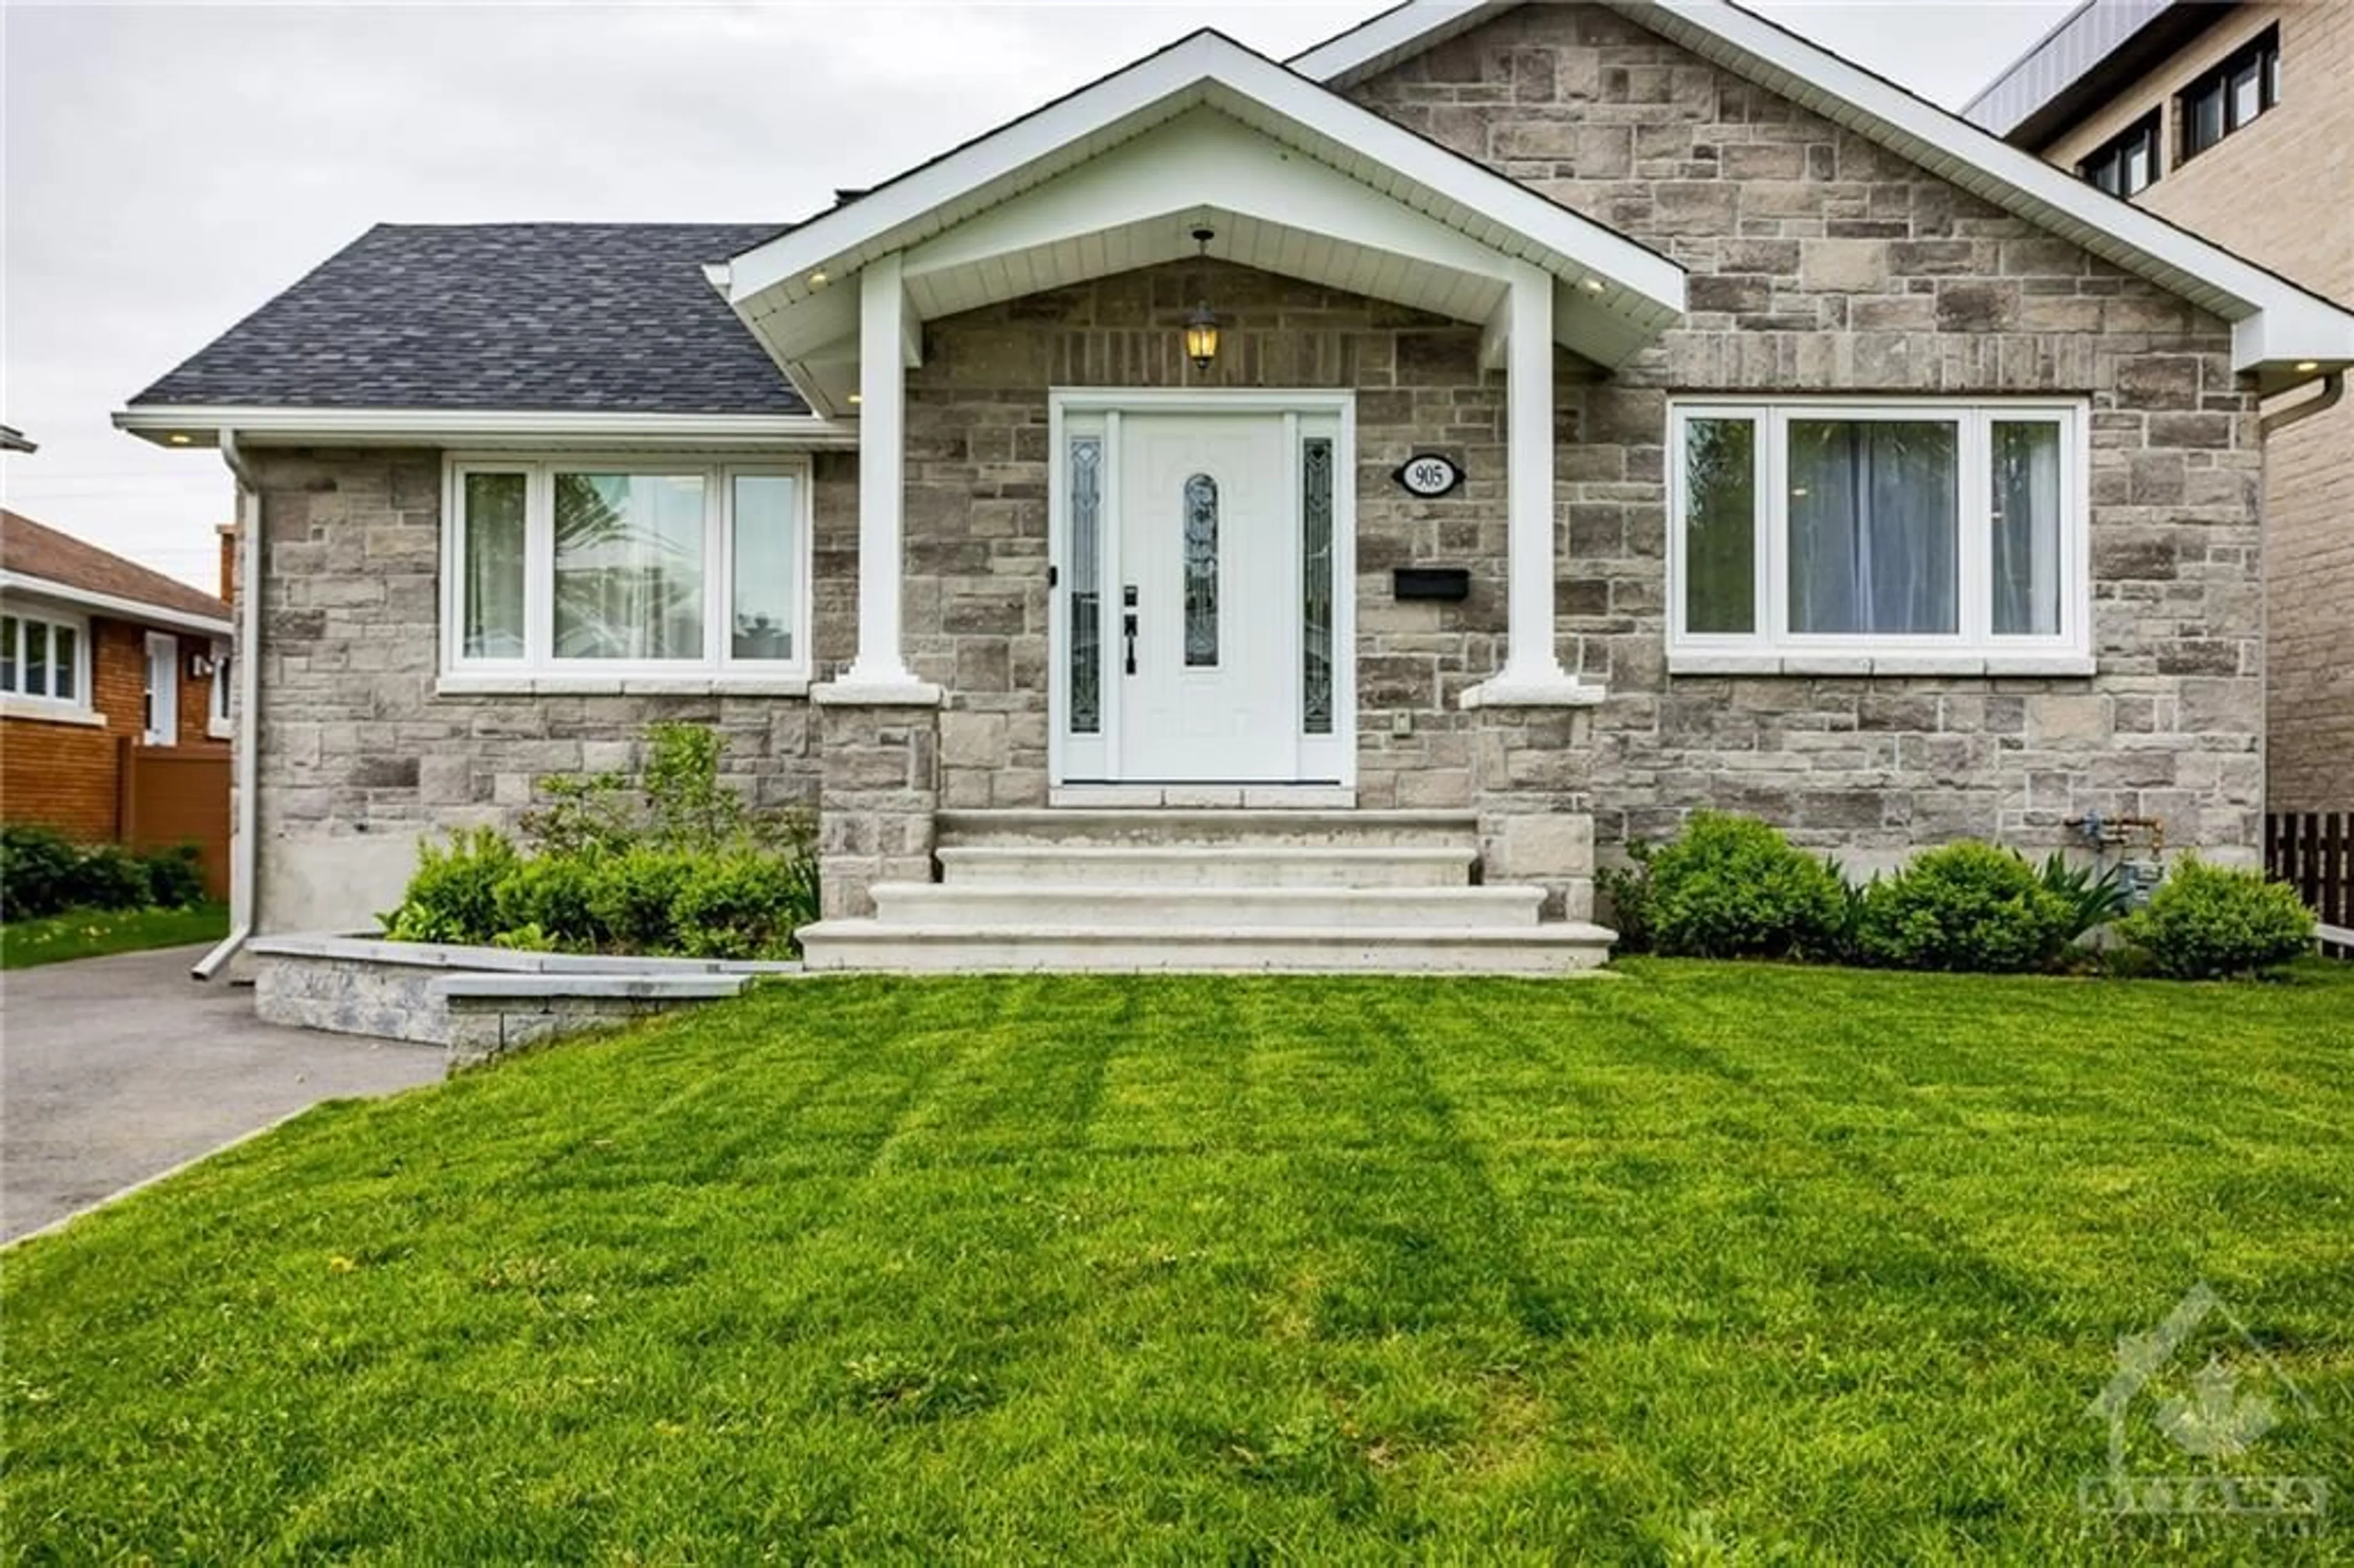 Home with brick exterior material for 905 WINNINGTON Ave, Ottawa Ontario K2B 5C6